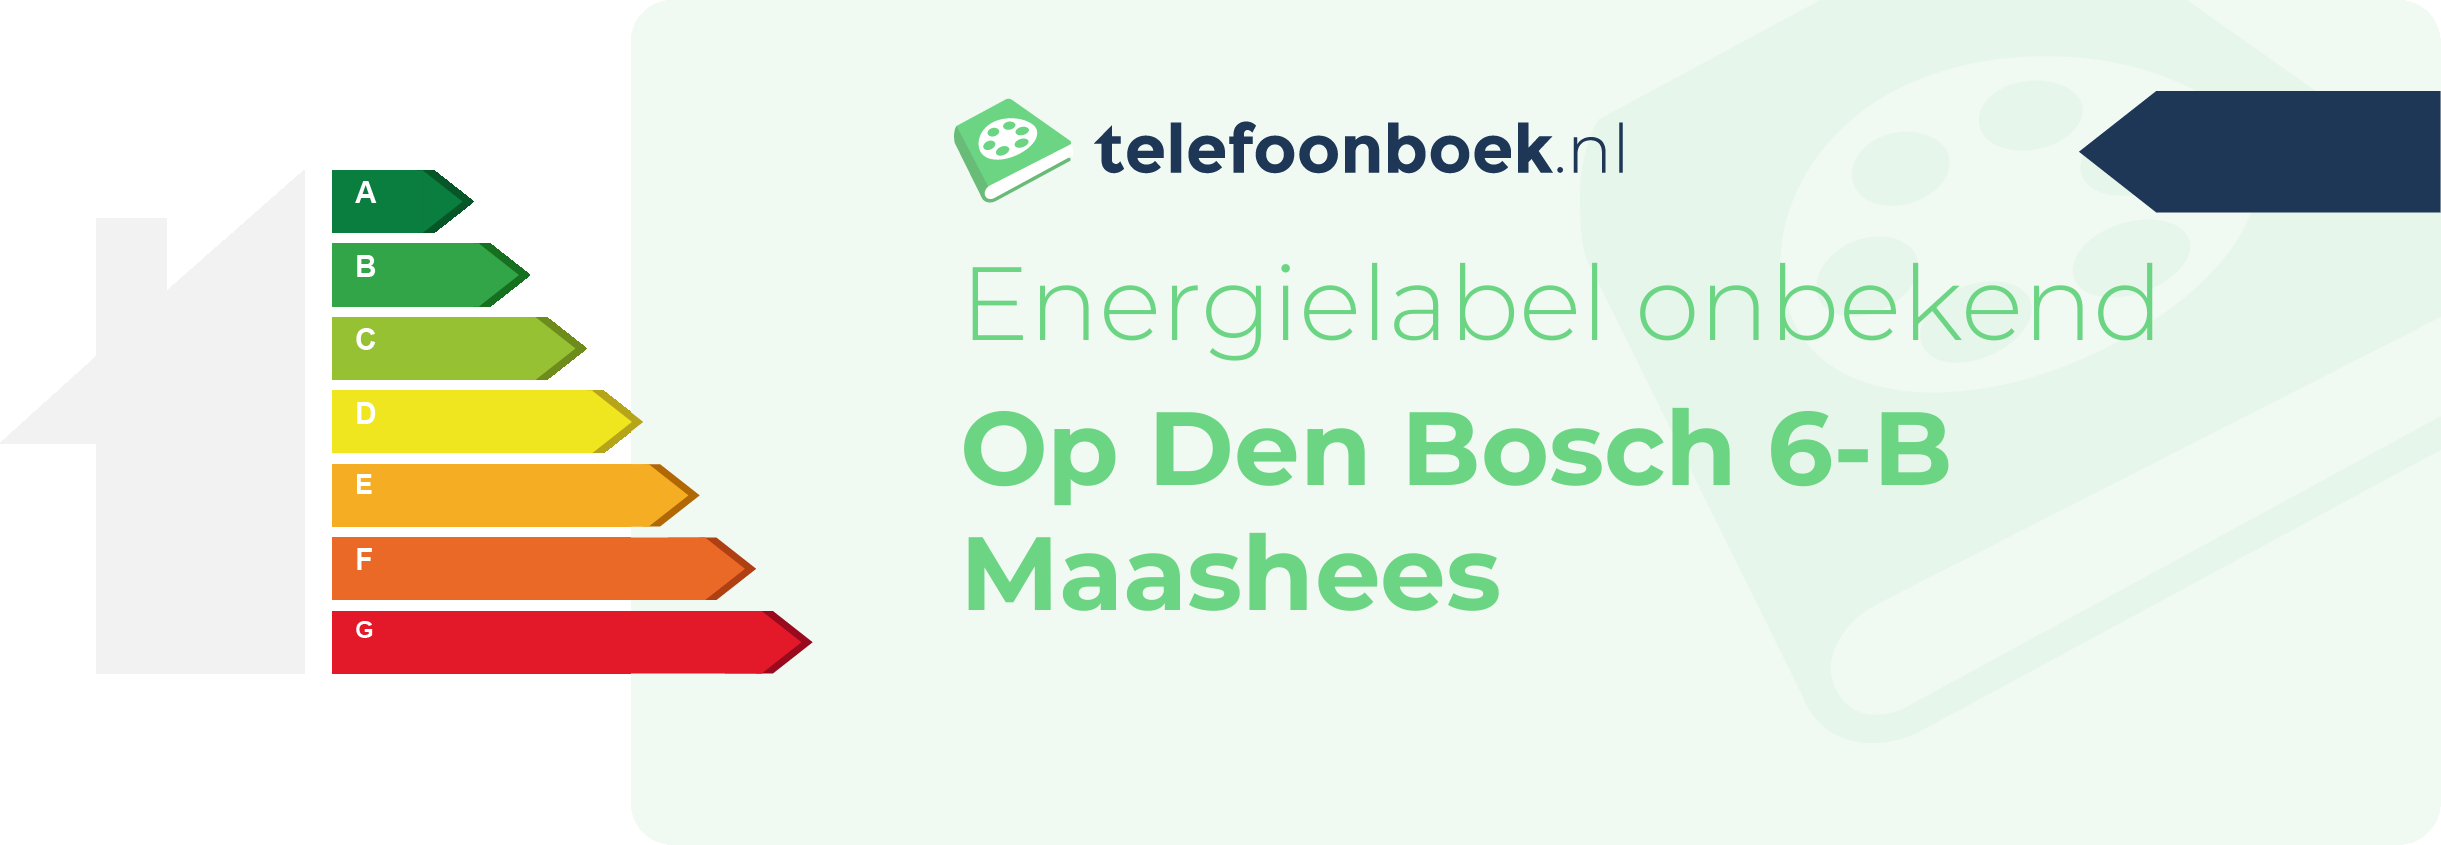 Energielabel Op Den Bosch 6-B Maashees